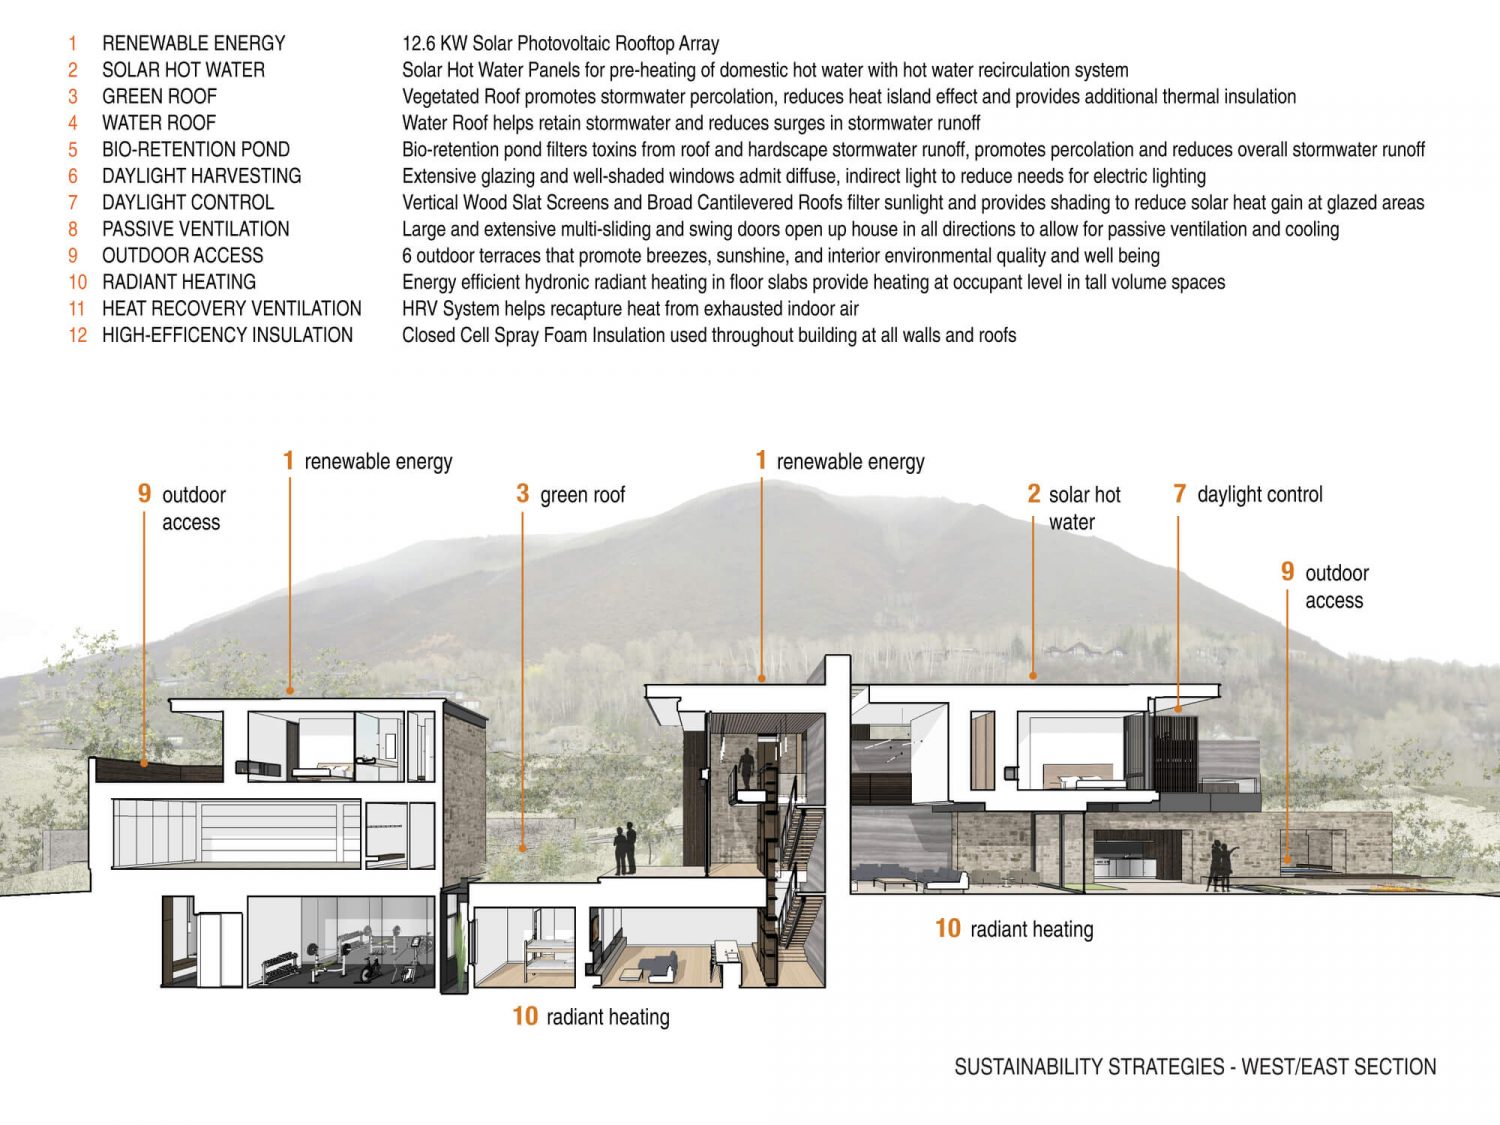 Aspen Residence by Aidlin Darling Design